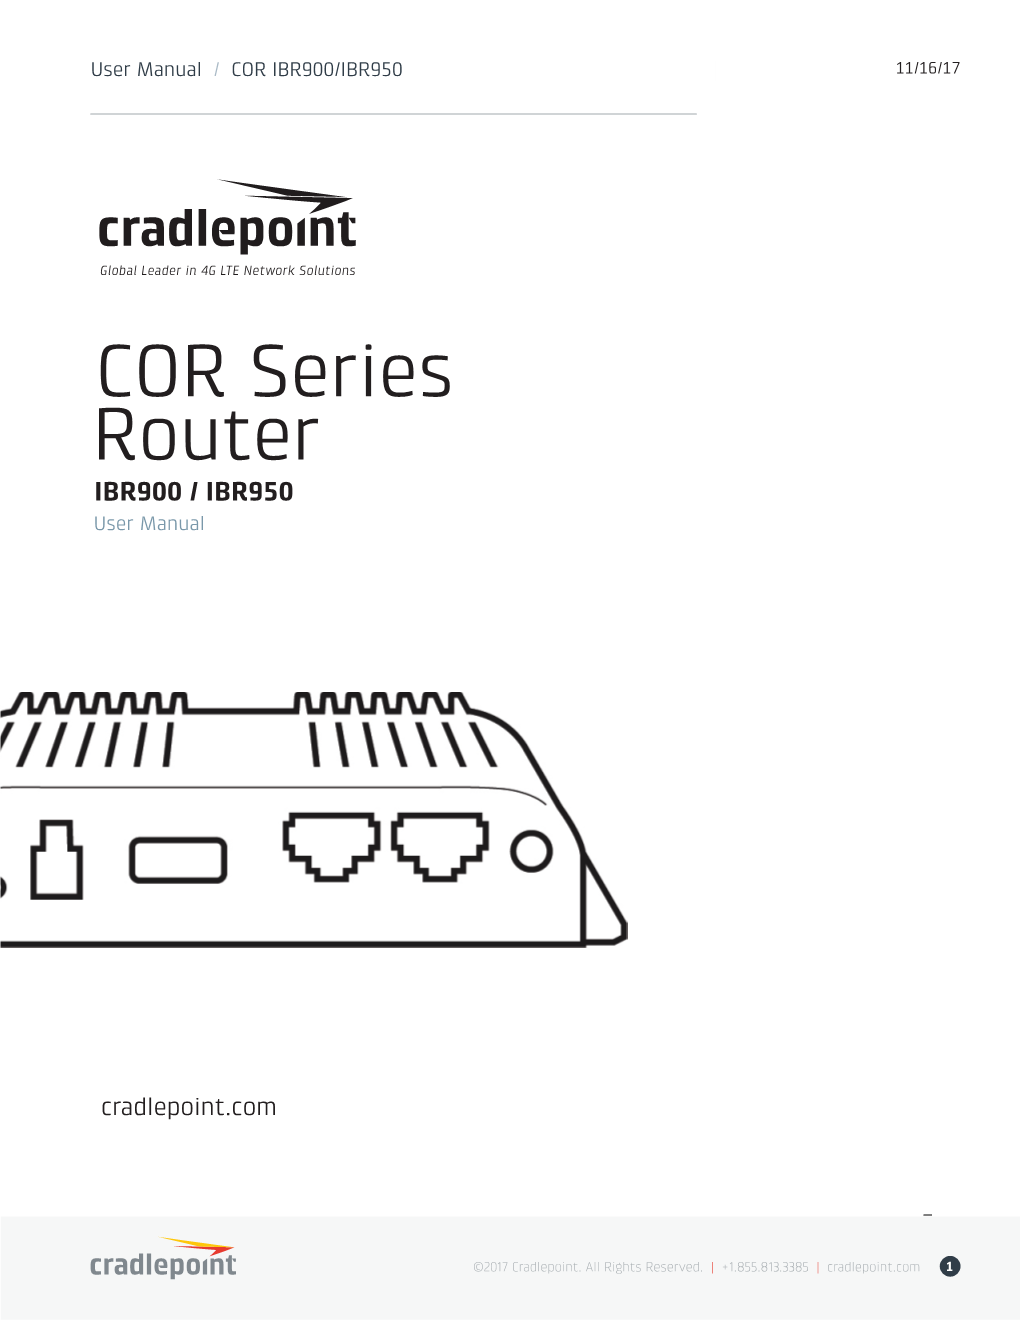 COR Series Router IBR900 / IBR950 User Manual